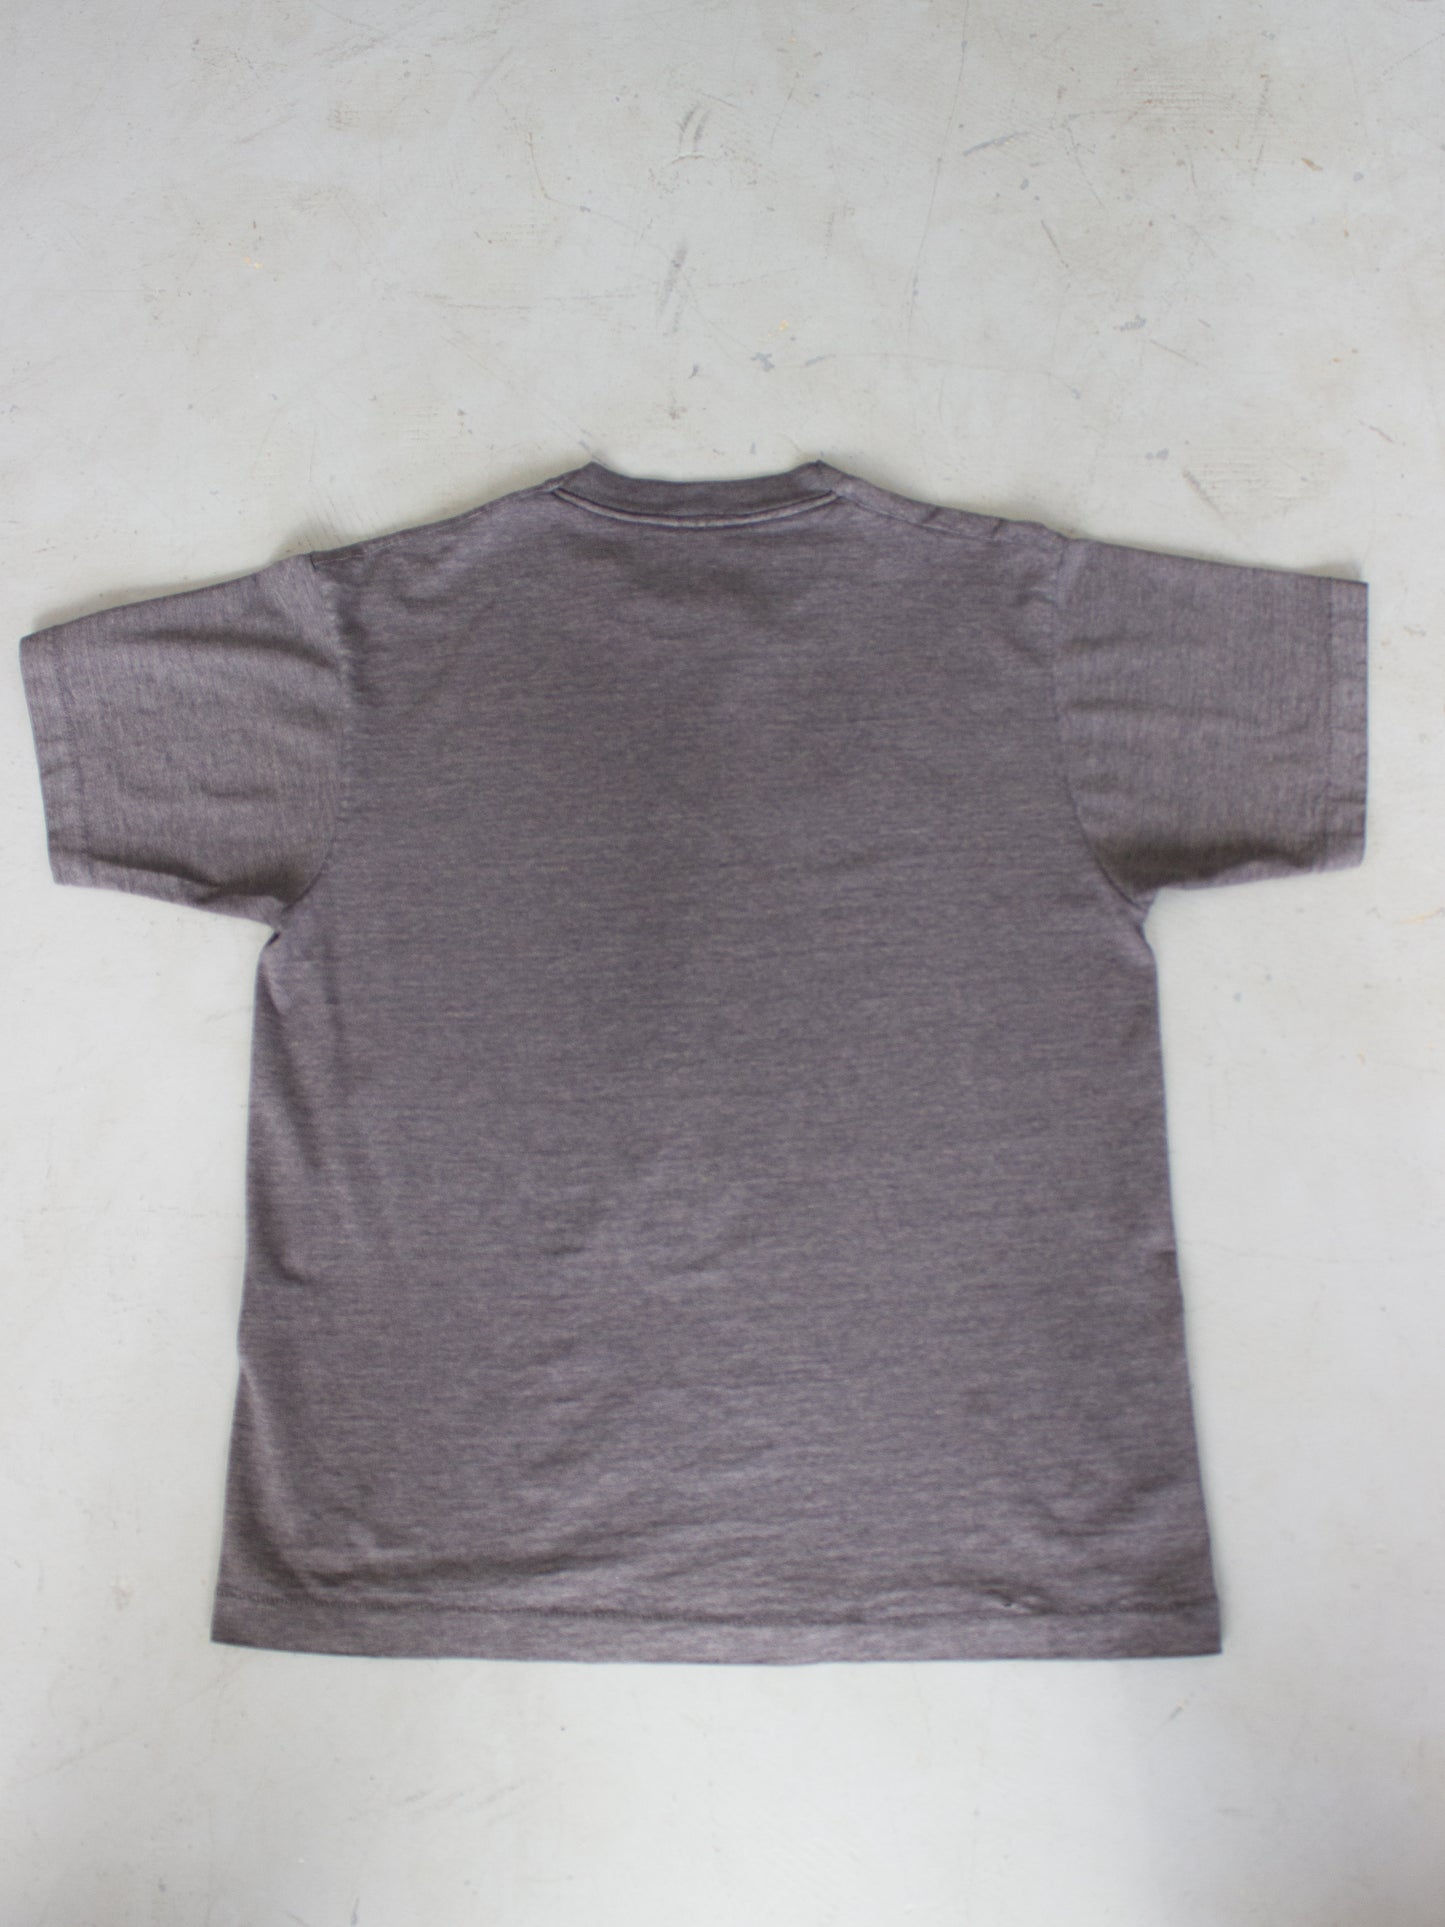 Vintage 1990's Paper Thin Randy Travis Grey T-shirt (Medium)